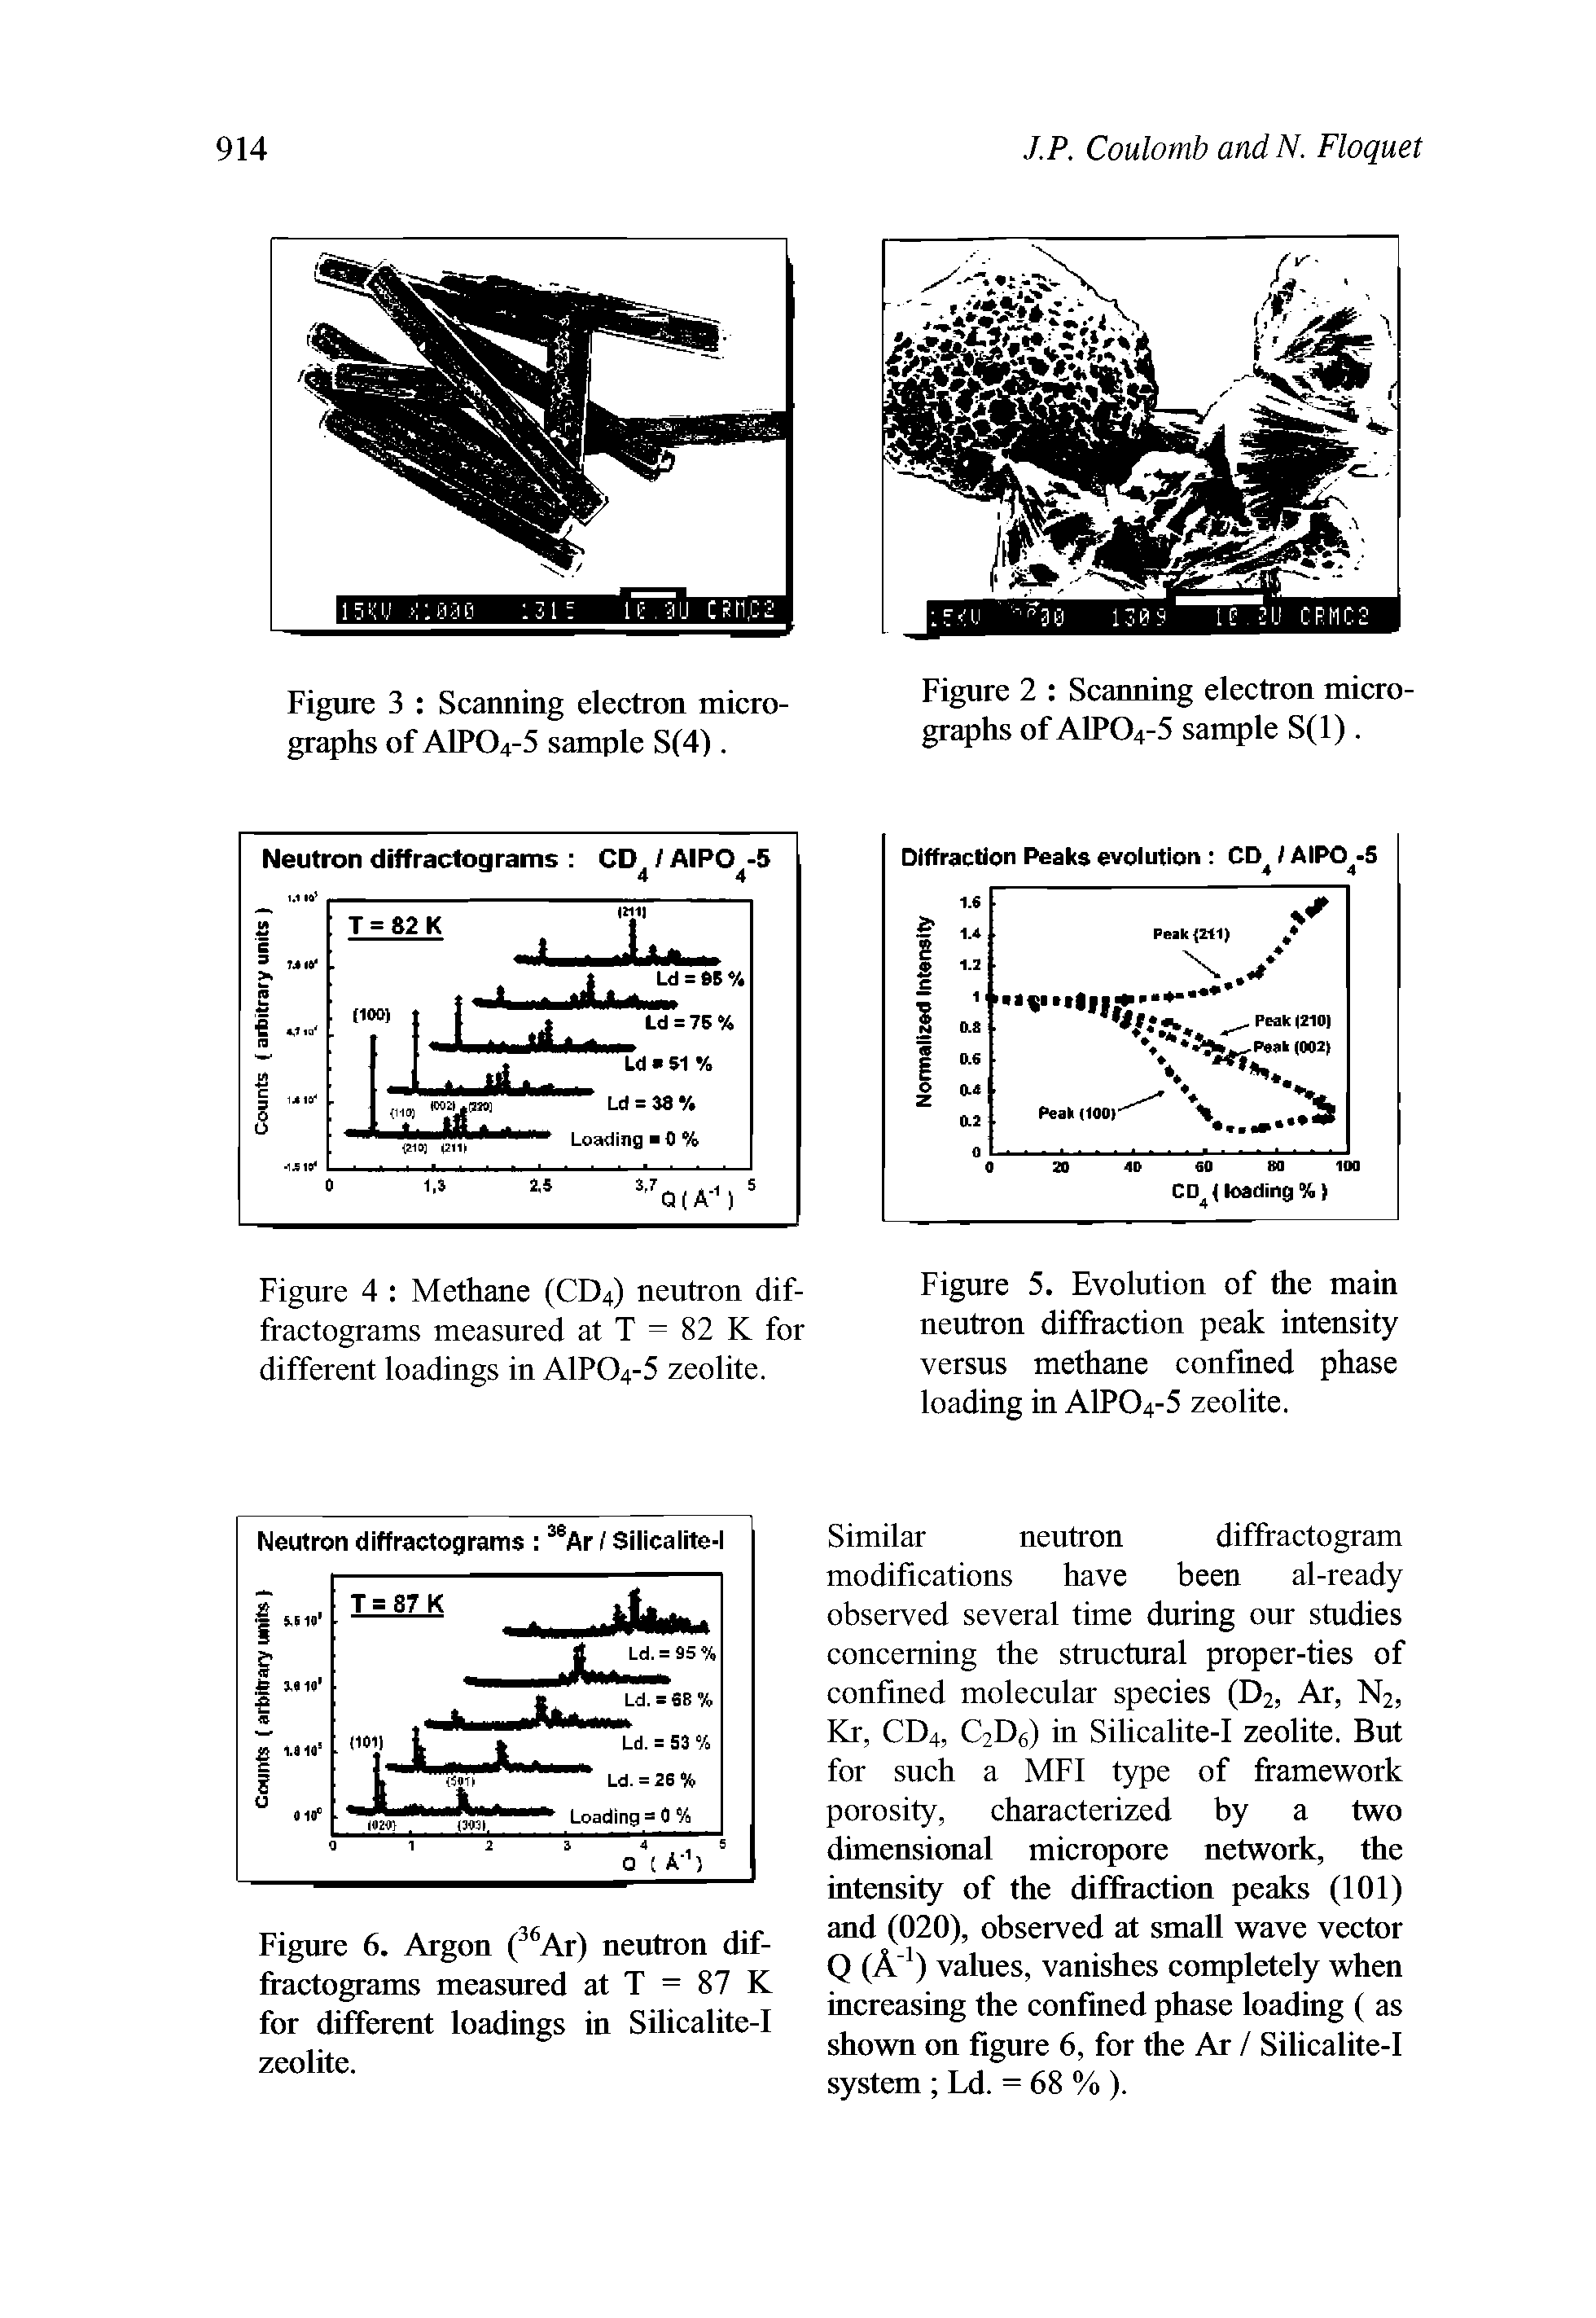 Figure 5. Evolution of the main neutron diffraction peak intensity versus methane confined phase loading in AlP04-5 zeolite.